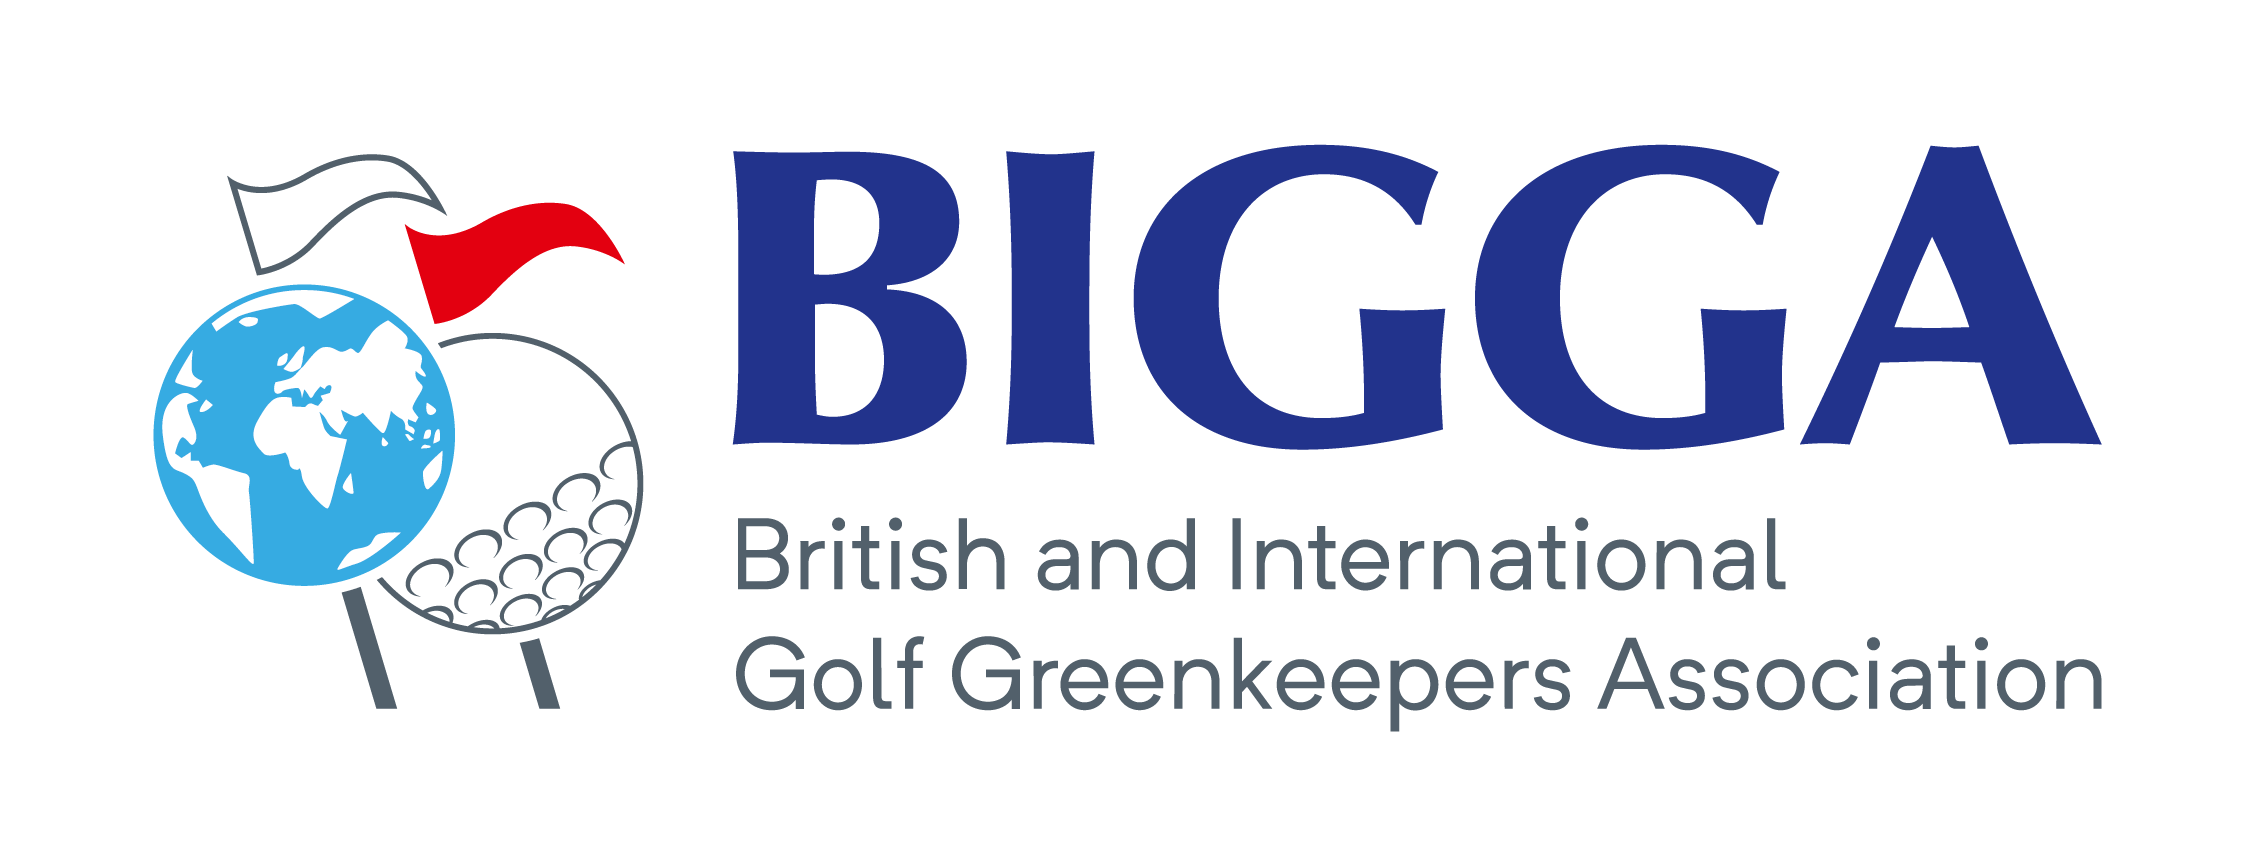 BIGGA Logo LND CMYK - WEB USE ONLY.png